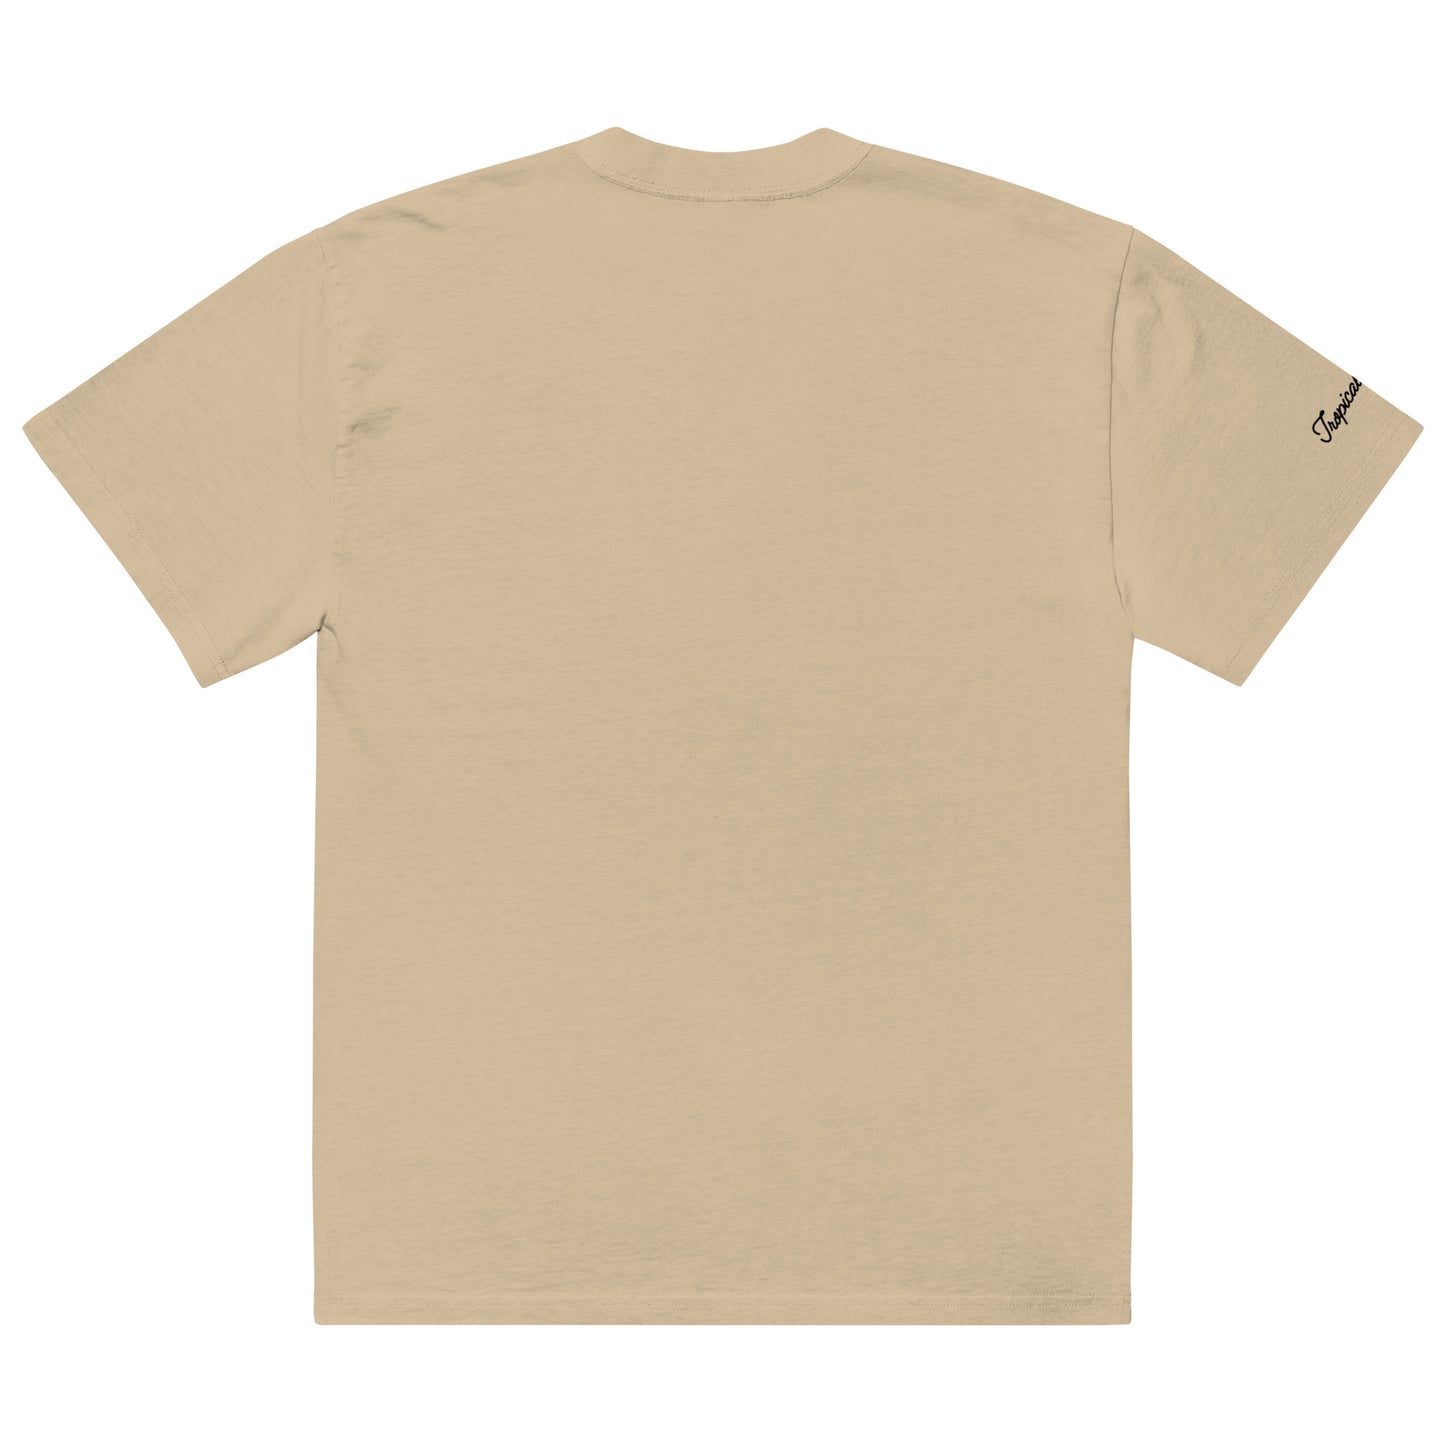 Oversized Tropical Seas Printed Faded T-shirt - Tropical Seas Clothing 